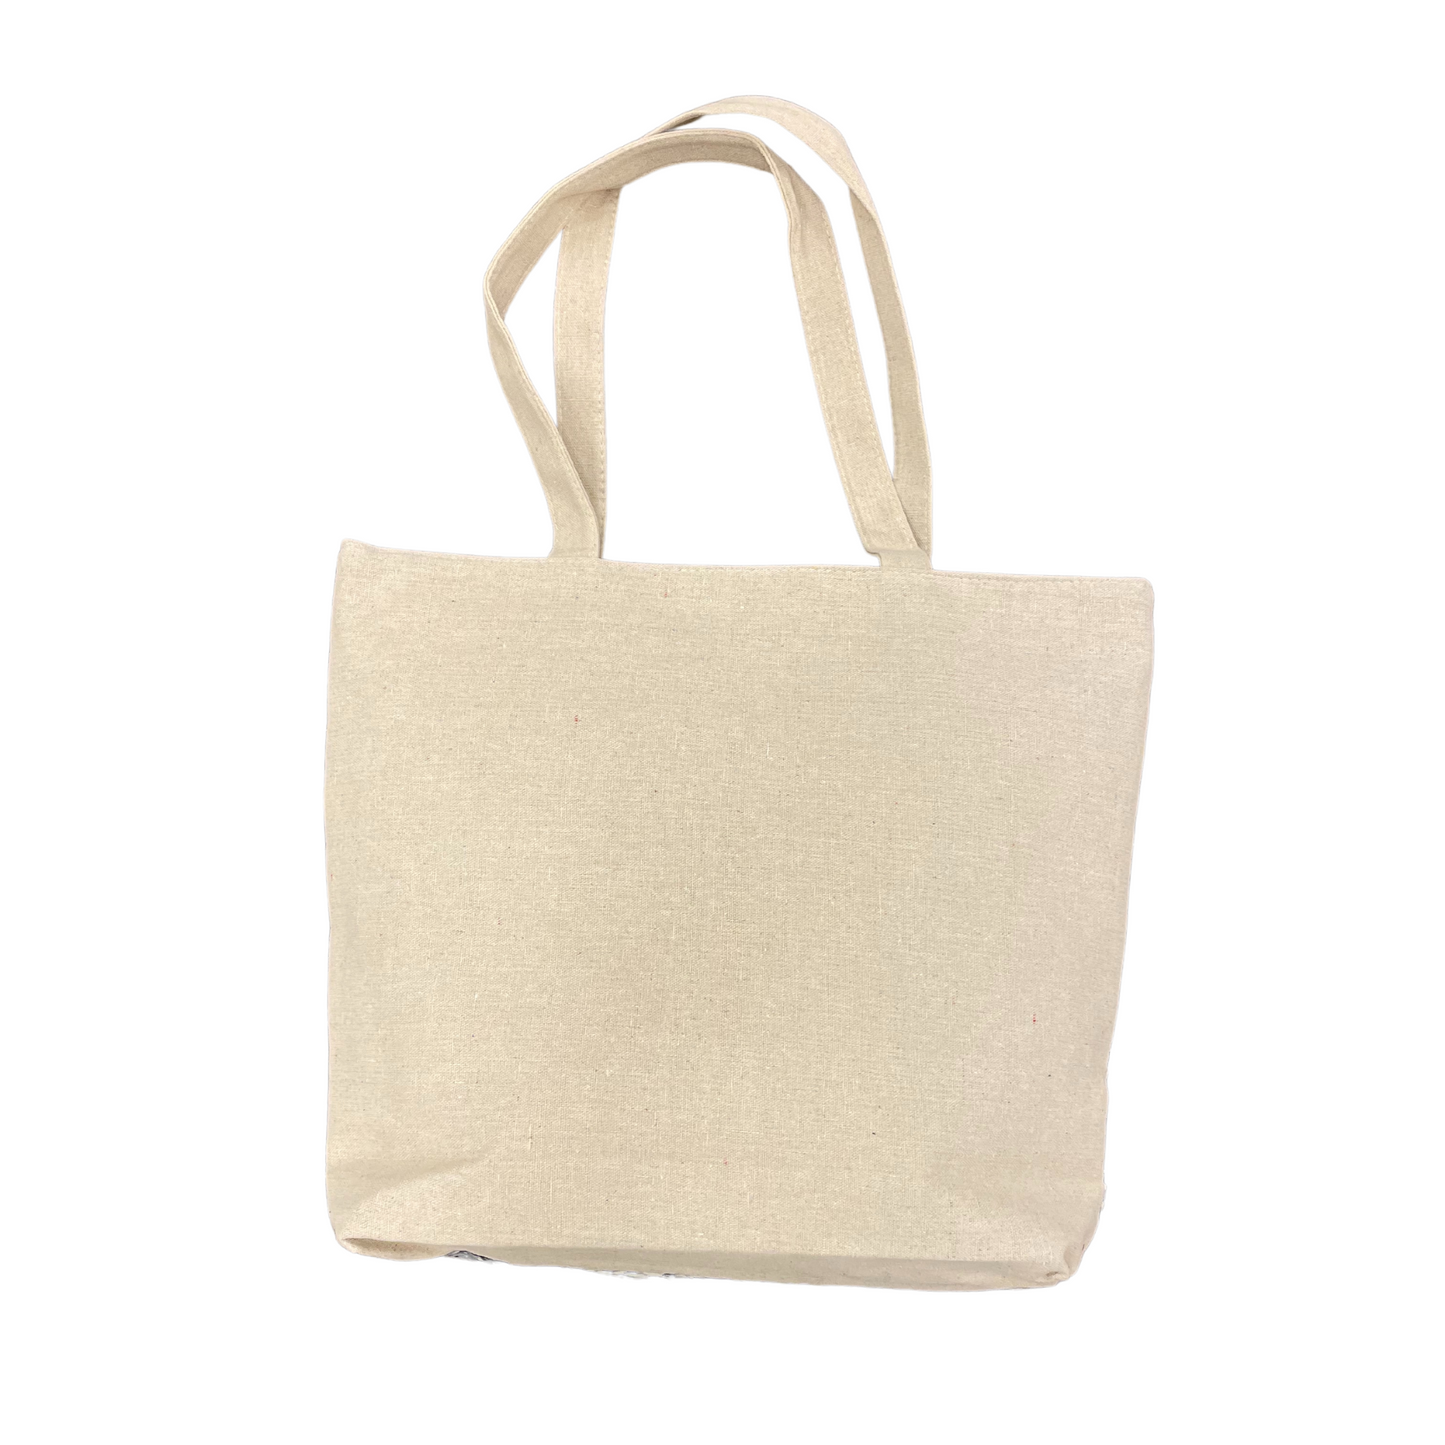 Justin&Taylor Snake Print Reusable Tote Bag